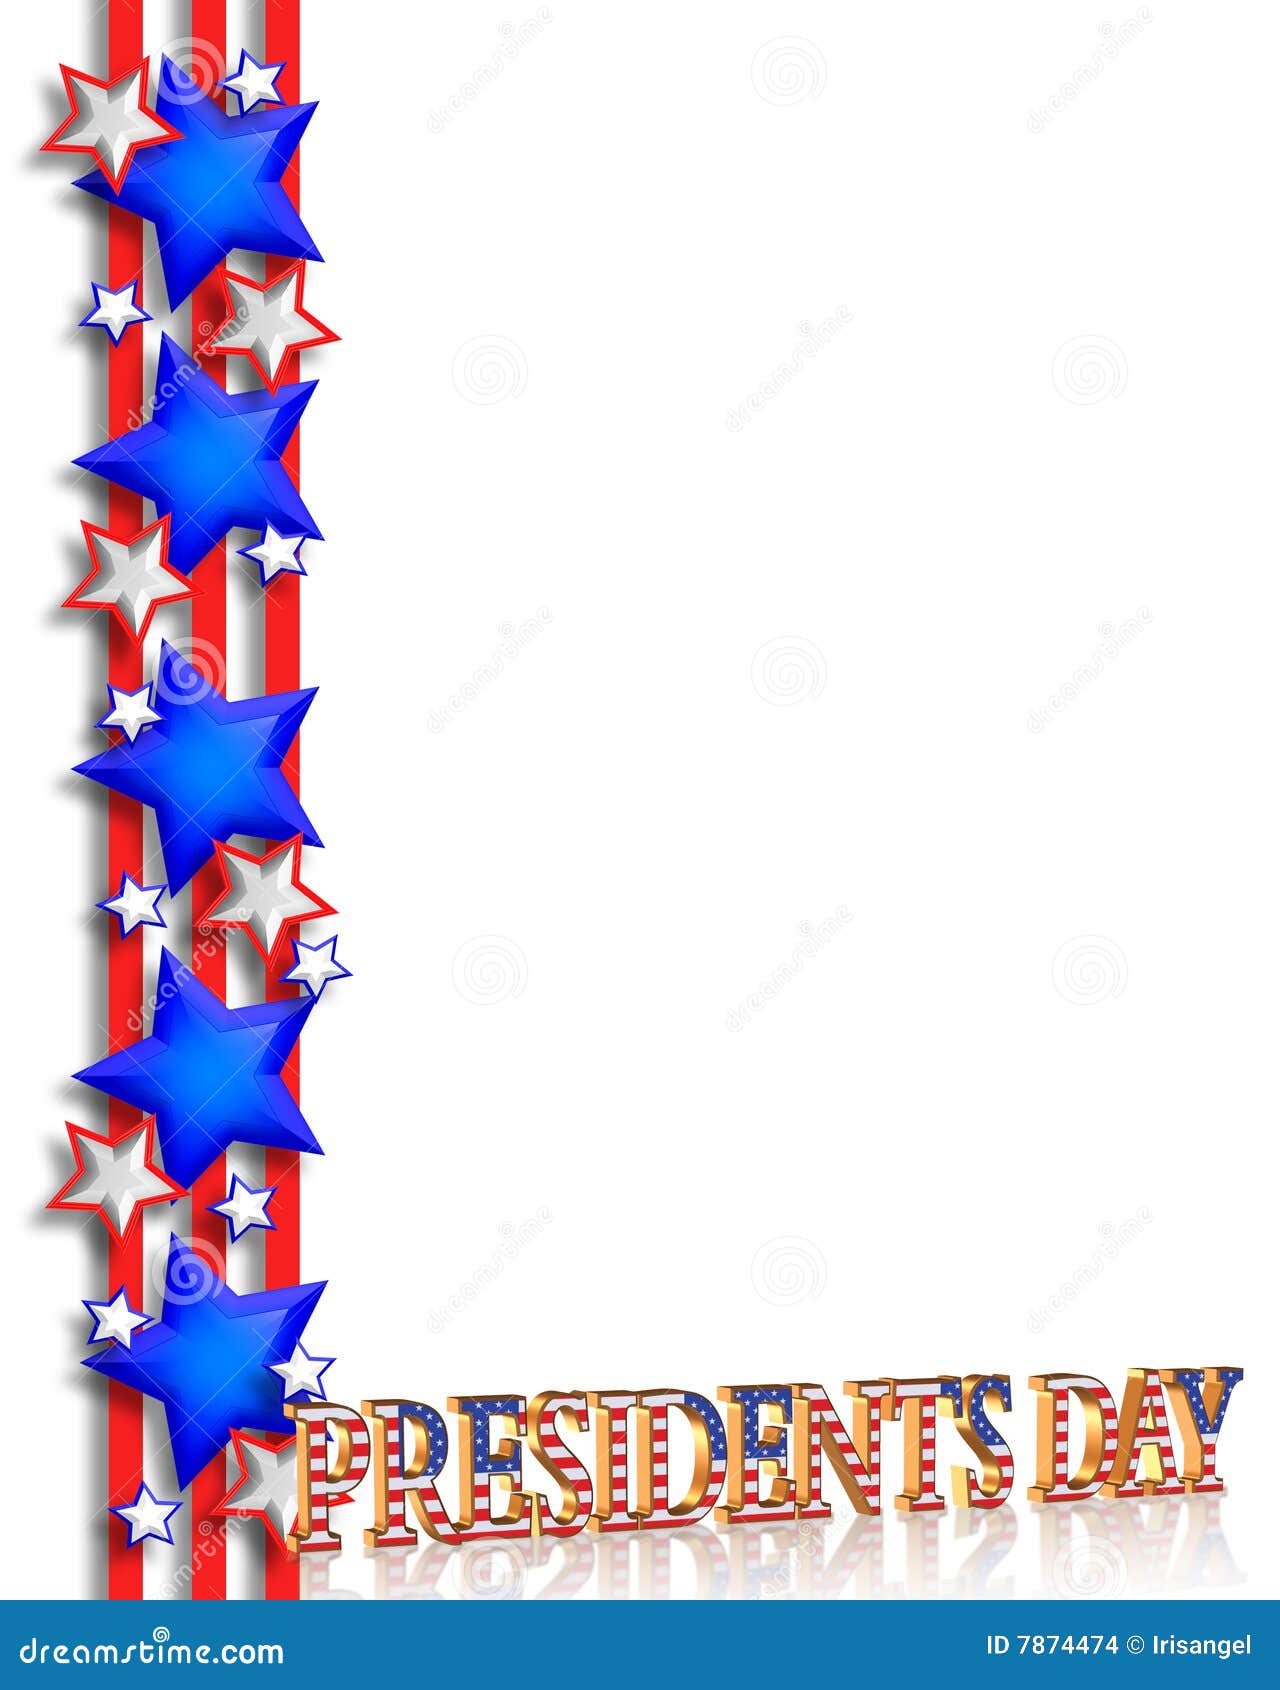 Presidents Day Background Border Stock Images - Image: 78744741130 x 1300